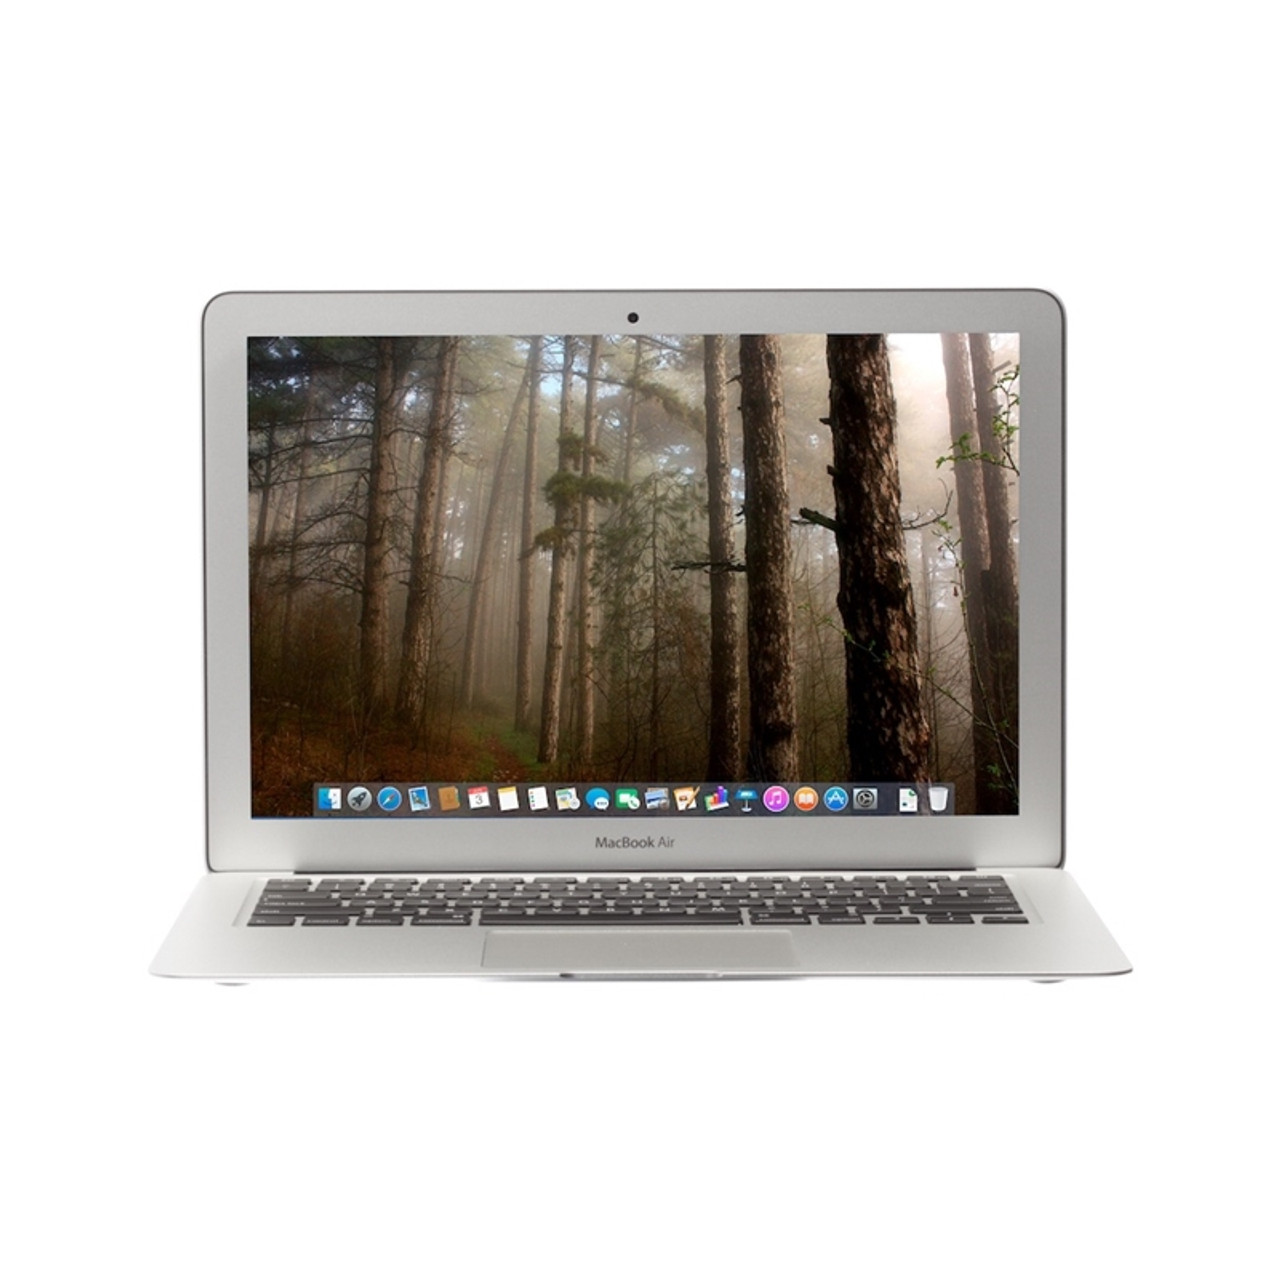 Fair Condition*: Apple MacBook Air 13-inch 1.6GHz Core i5 (Early 2015)  MMGF2LL/A 4